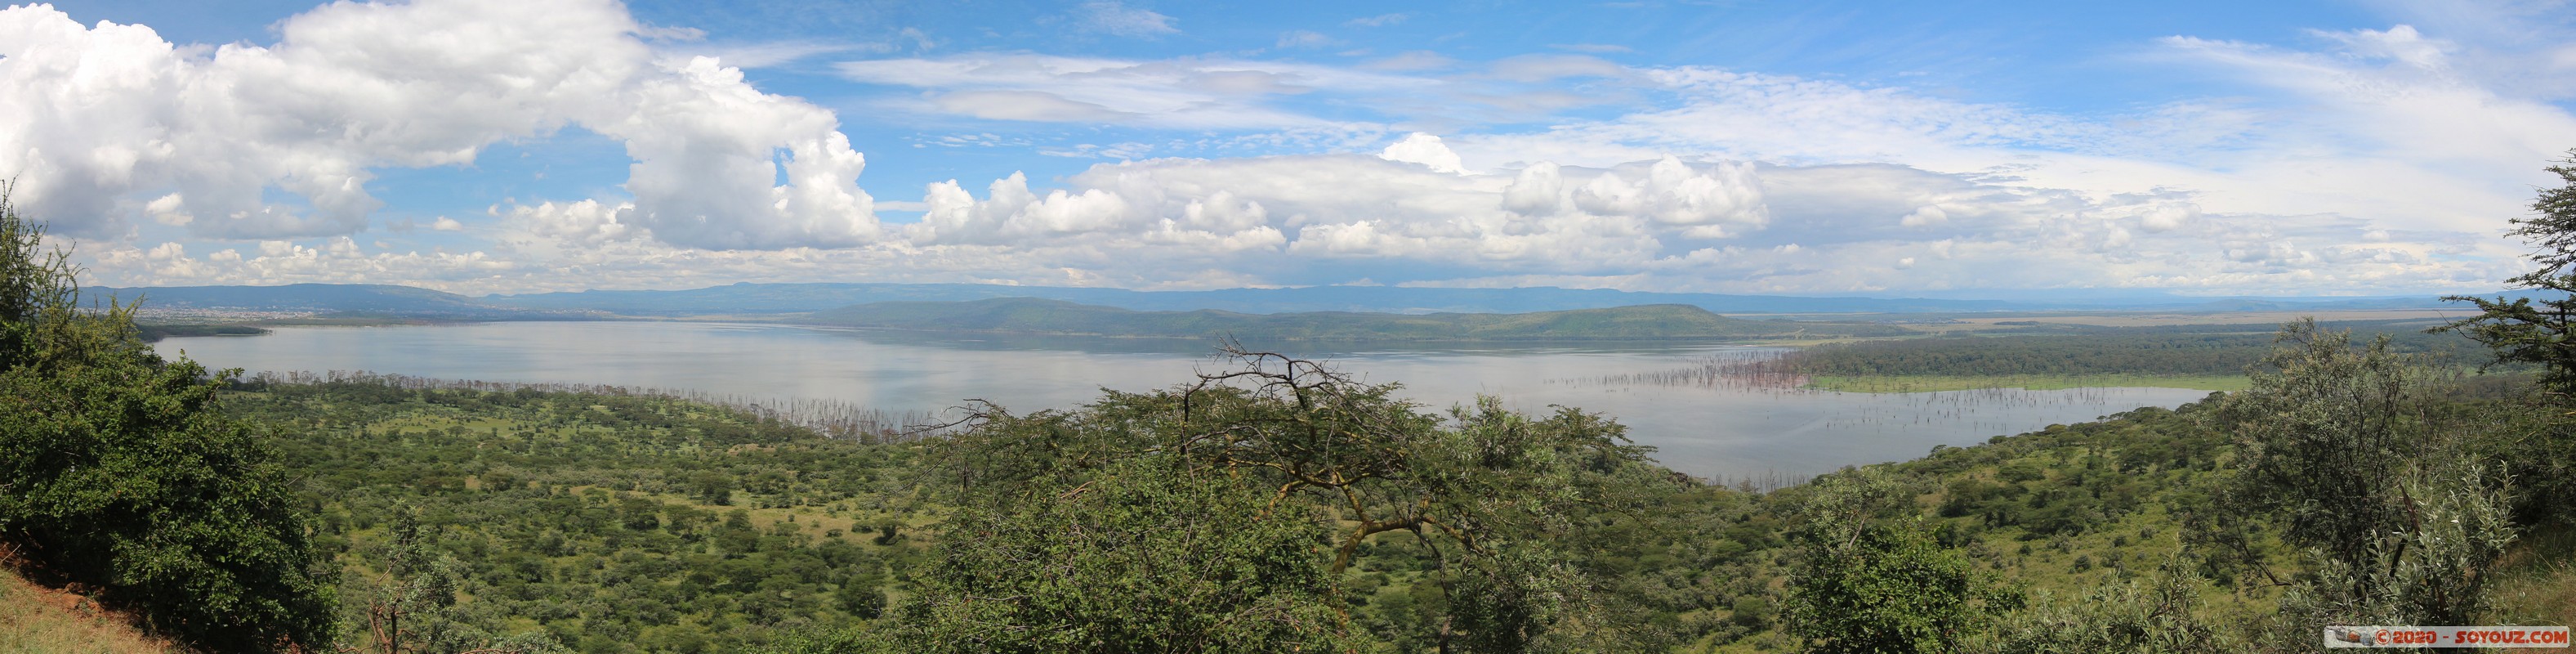 Lake Nakuru National Park - Out of Africa viewpoint - Panorama
Mots-clés: KEN Kenya Naishi Settlement Nakuru Lake Nakuru National Park Out of Africa Picnic Site panorama Lac